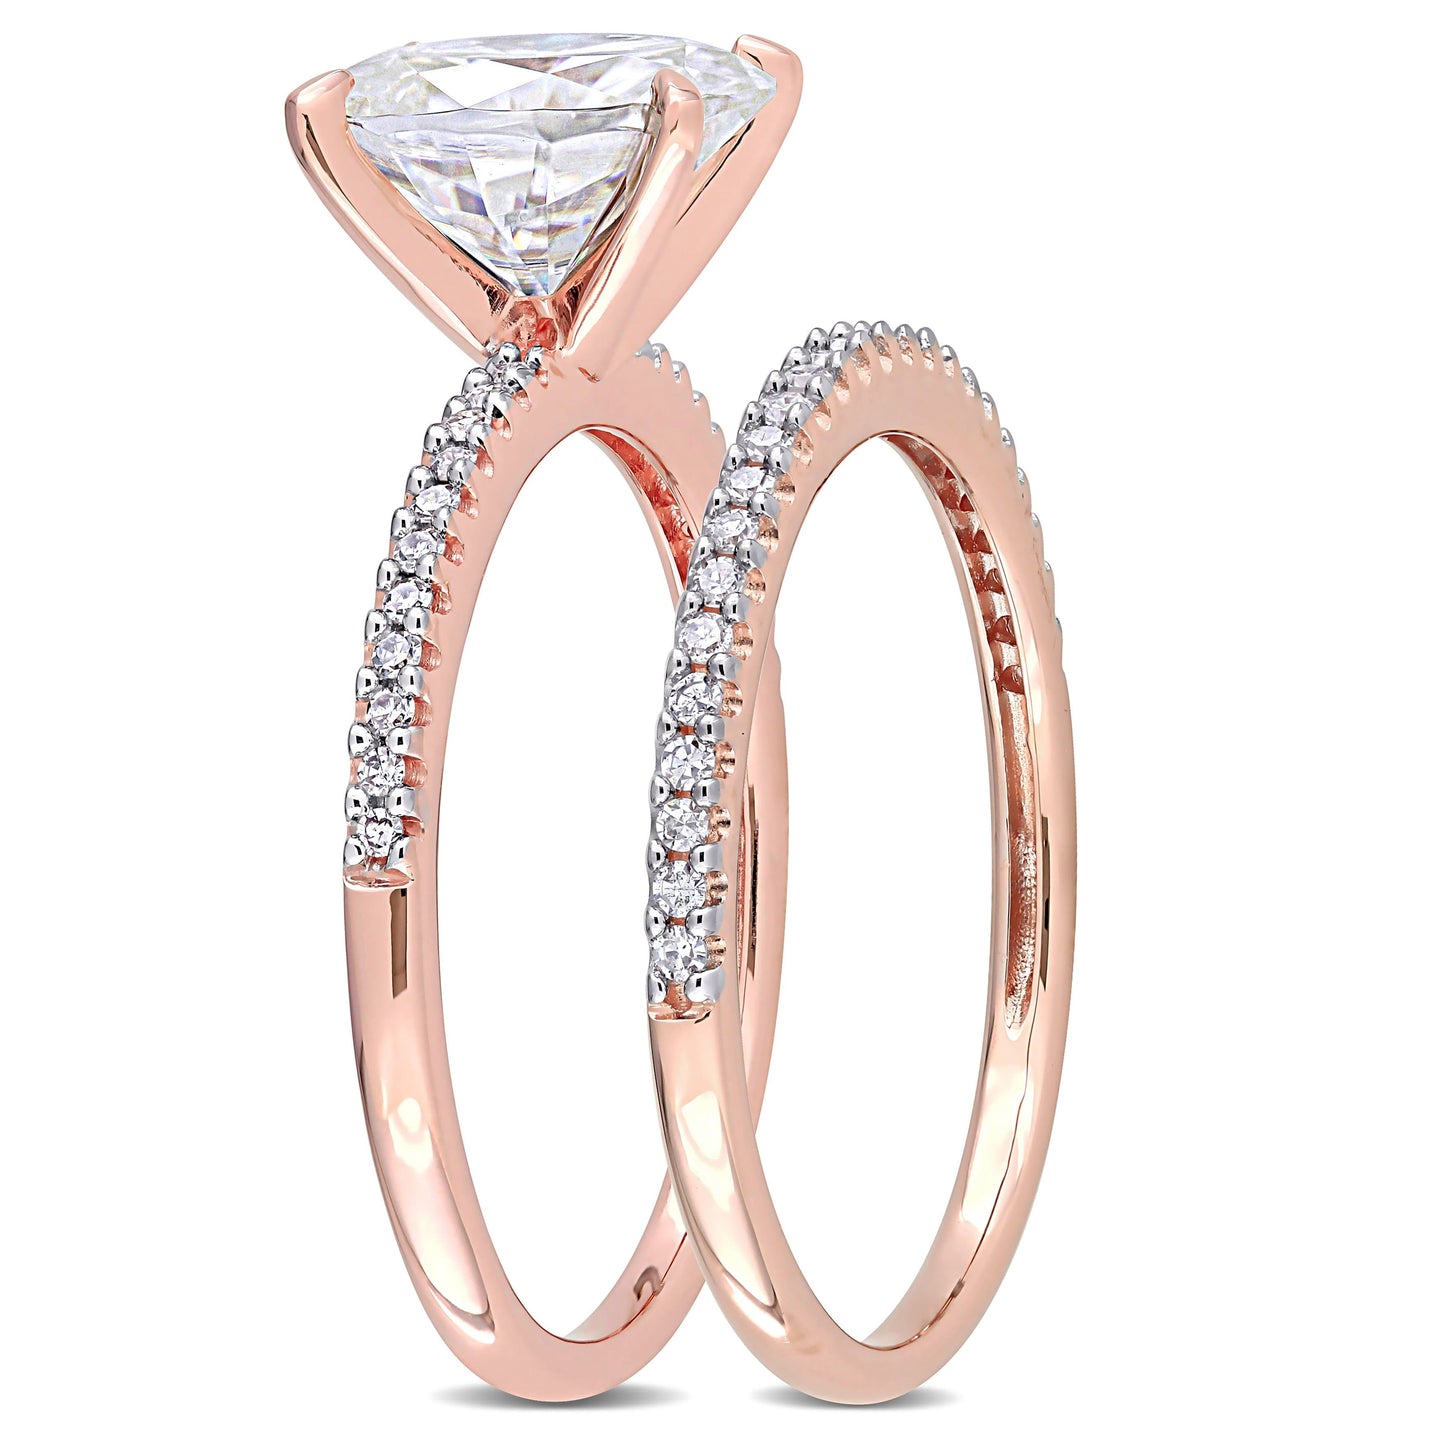 Oval Cut Moissanite & Diamond Bridal Set in 14k Rose Gold